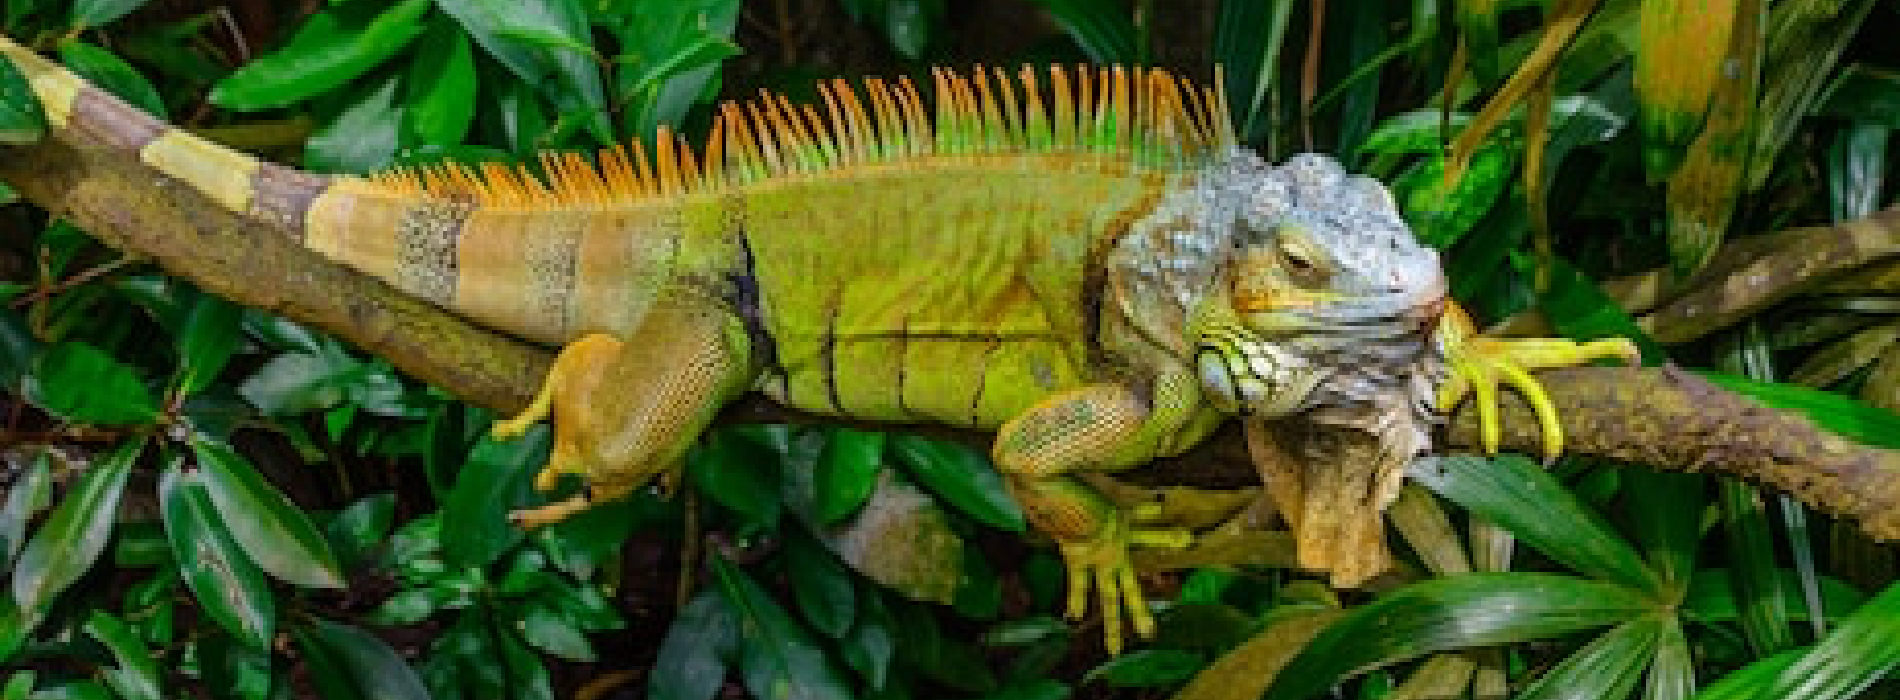 How much do desert iguana cost: